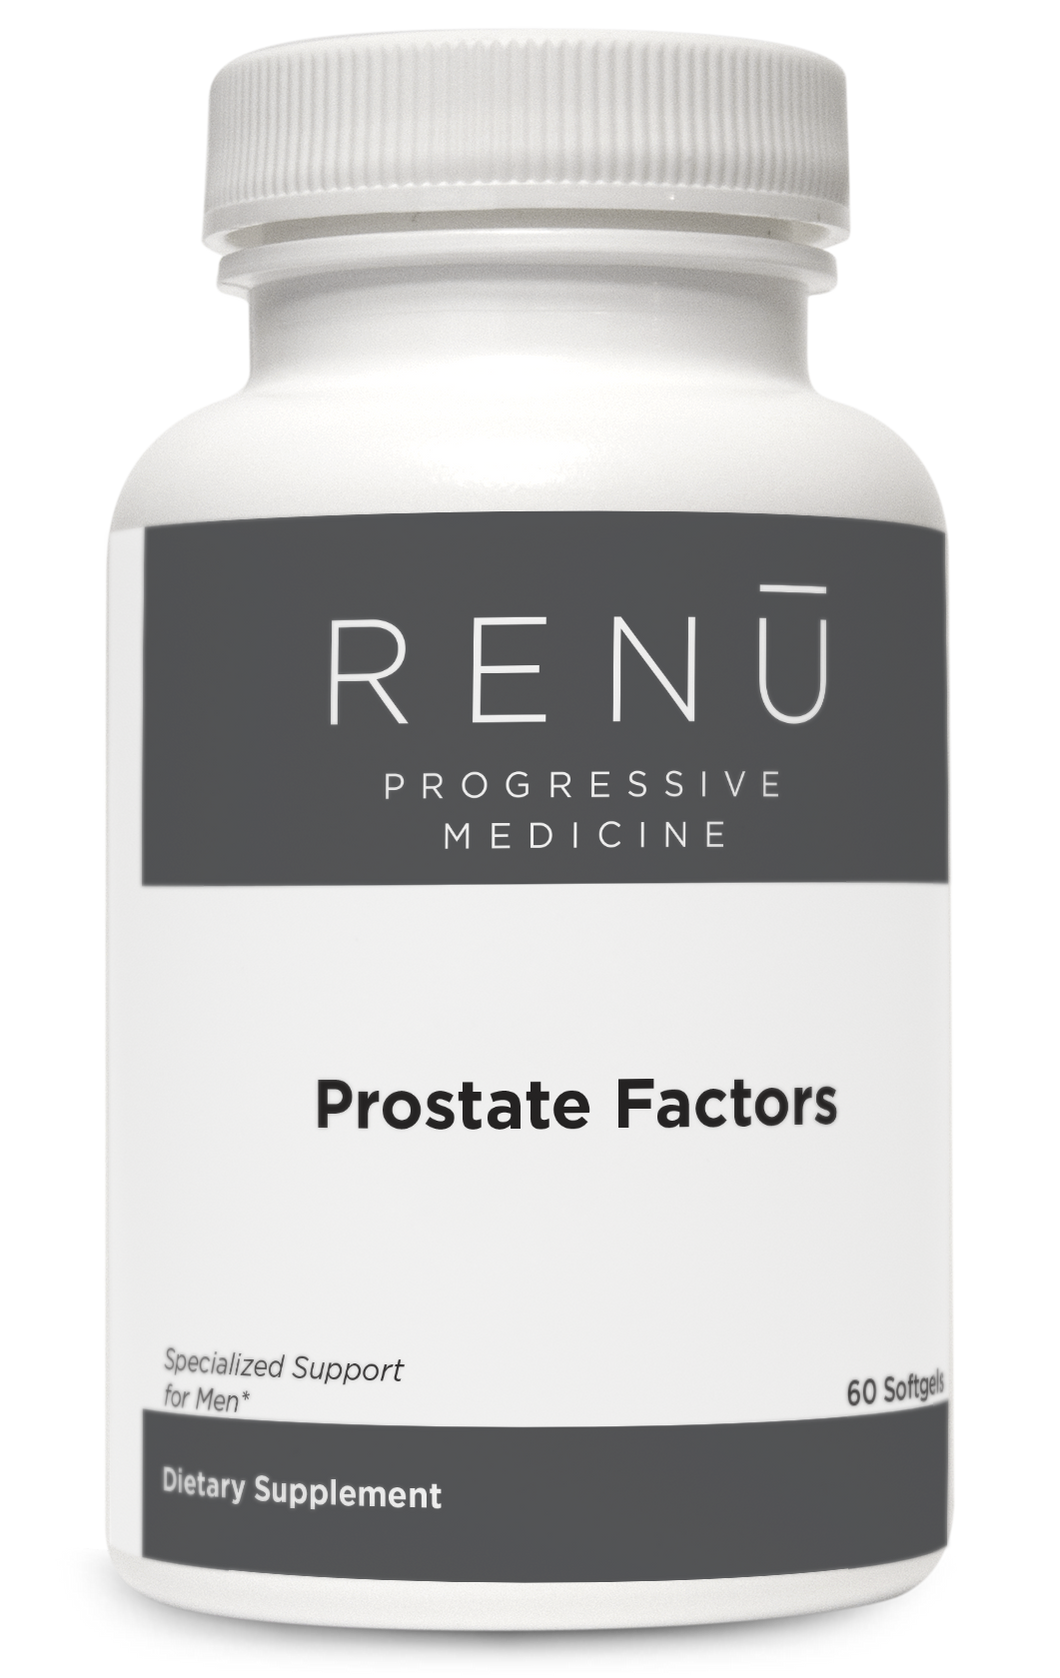 Prostate Factors